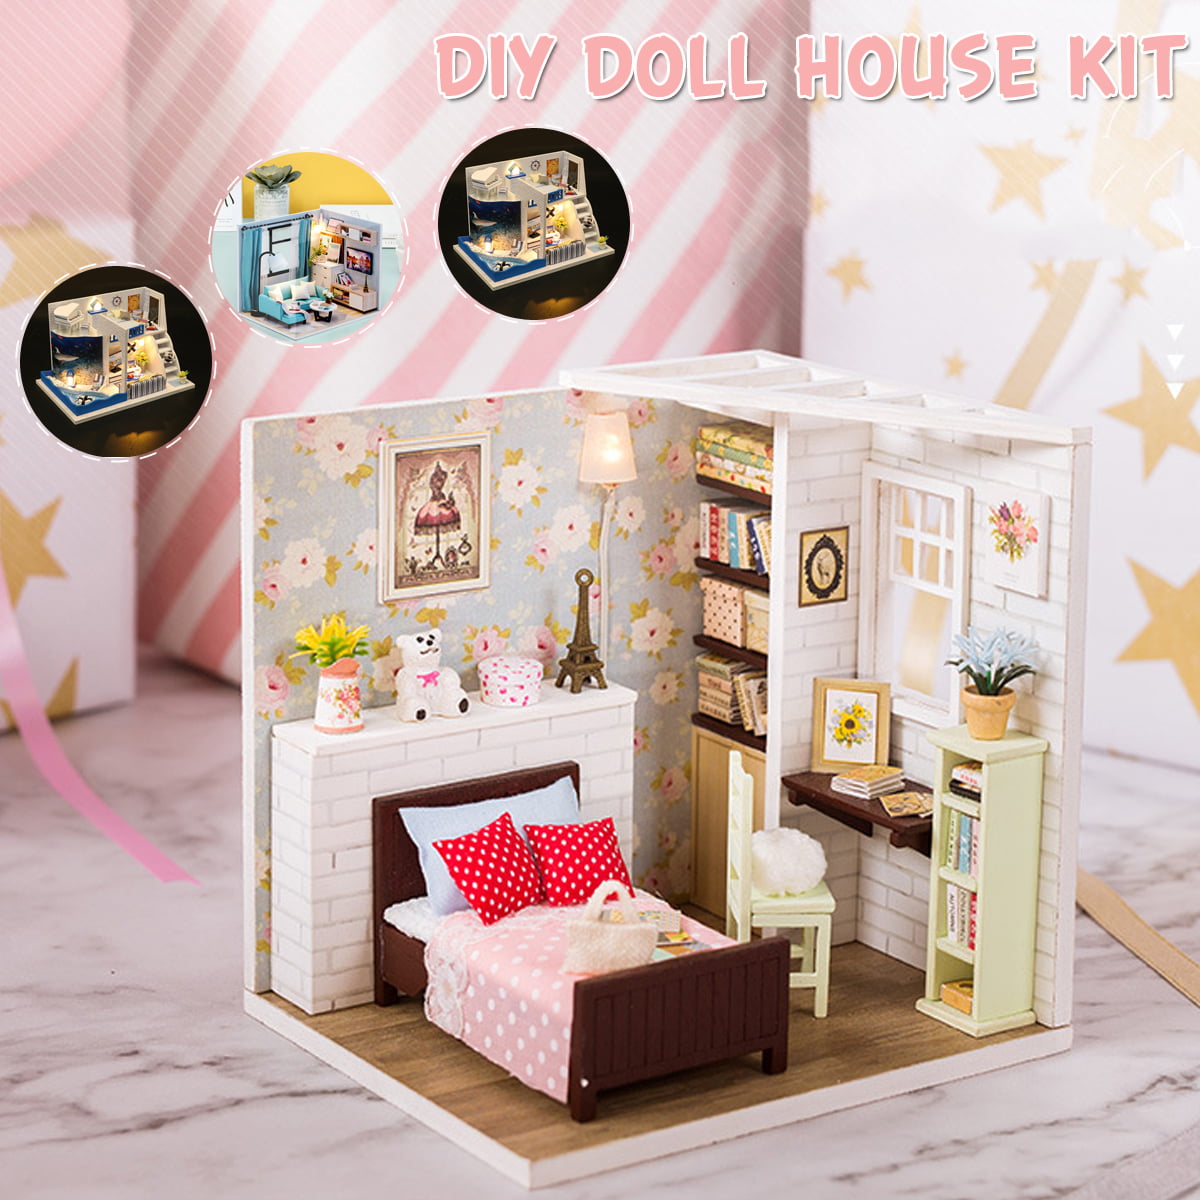 3D Wooden Miniature Dollhouse Furniture Kids DIY Doll House Model Princess Room 